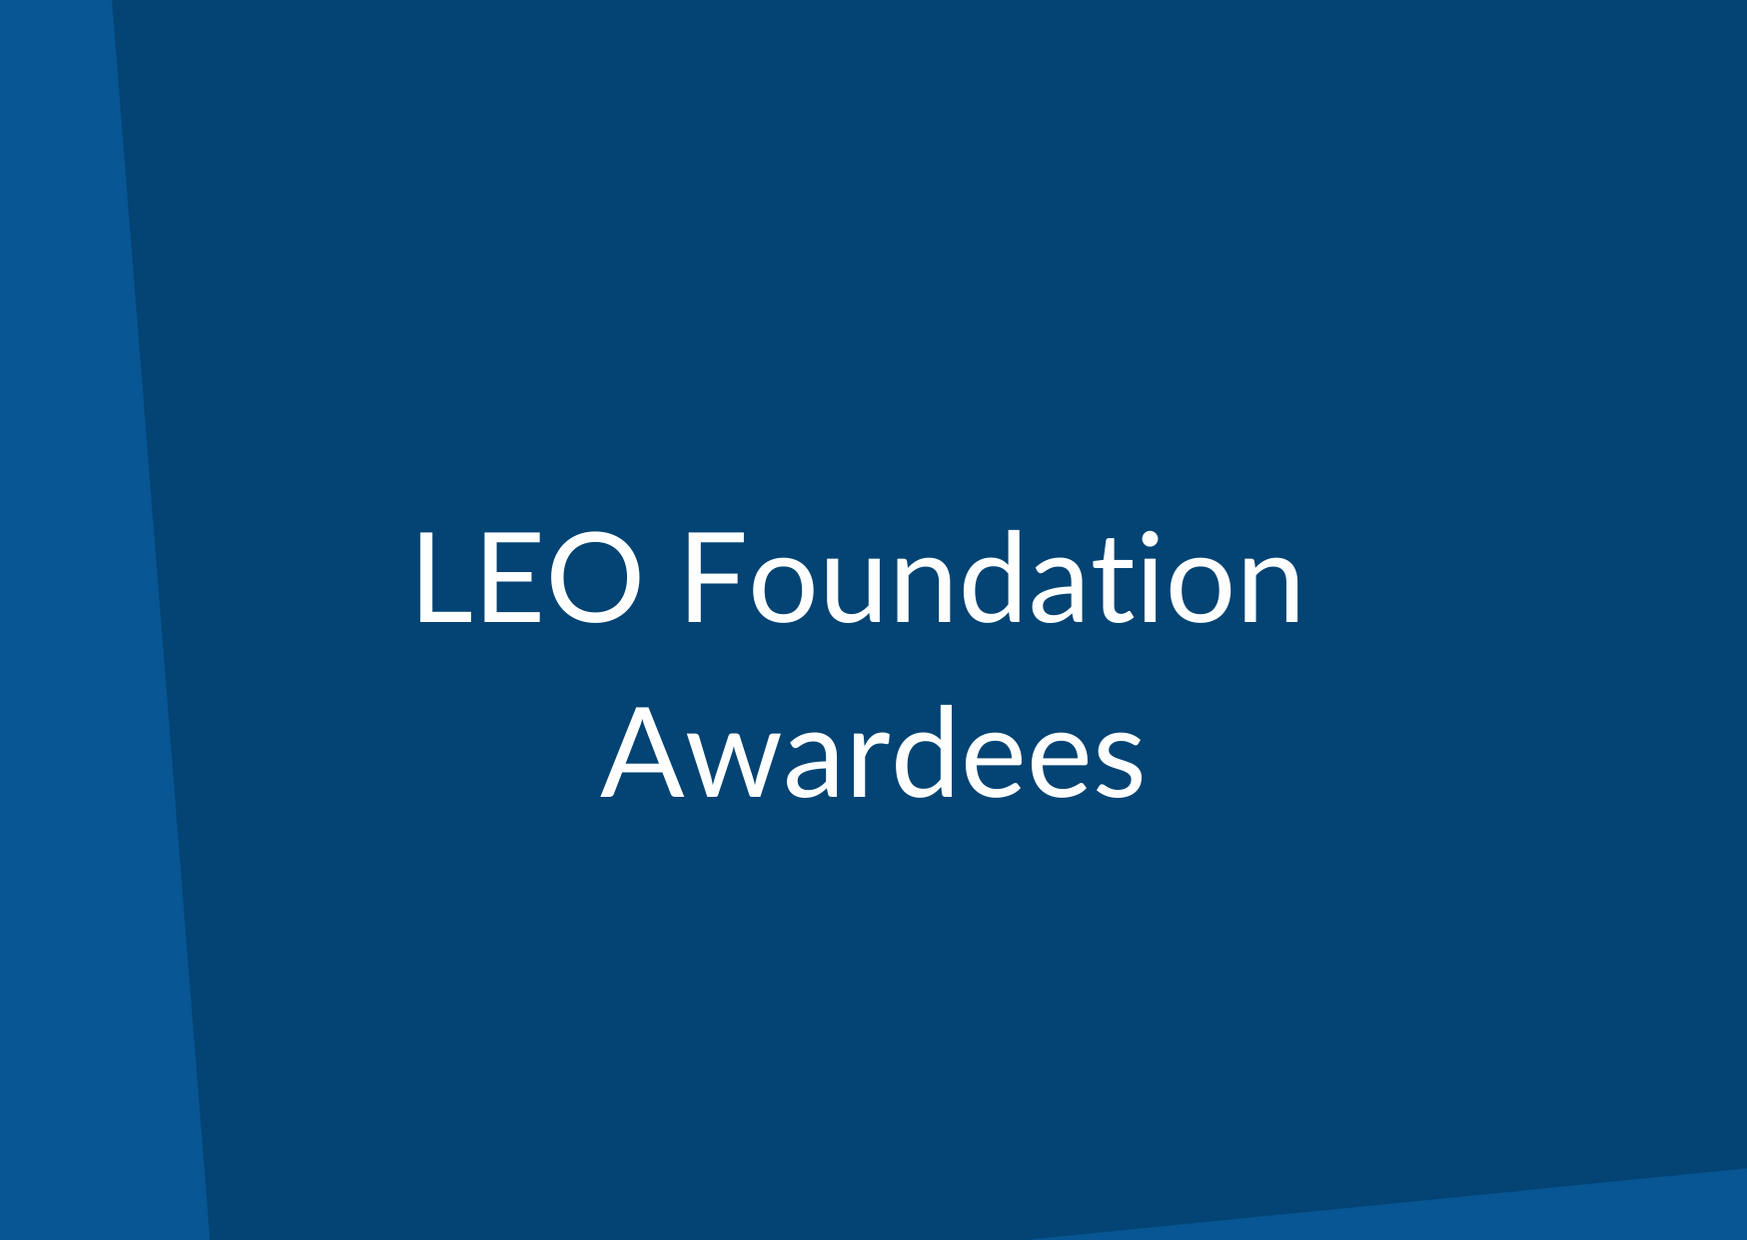 Leo foundation awardees